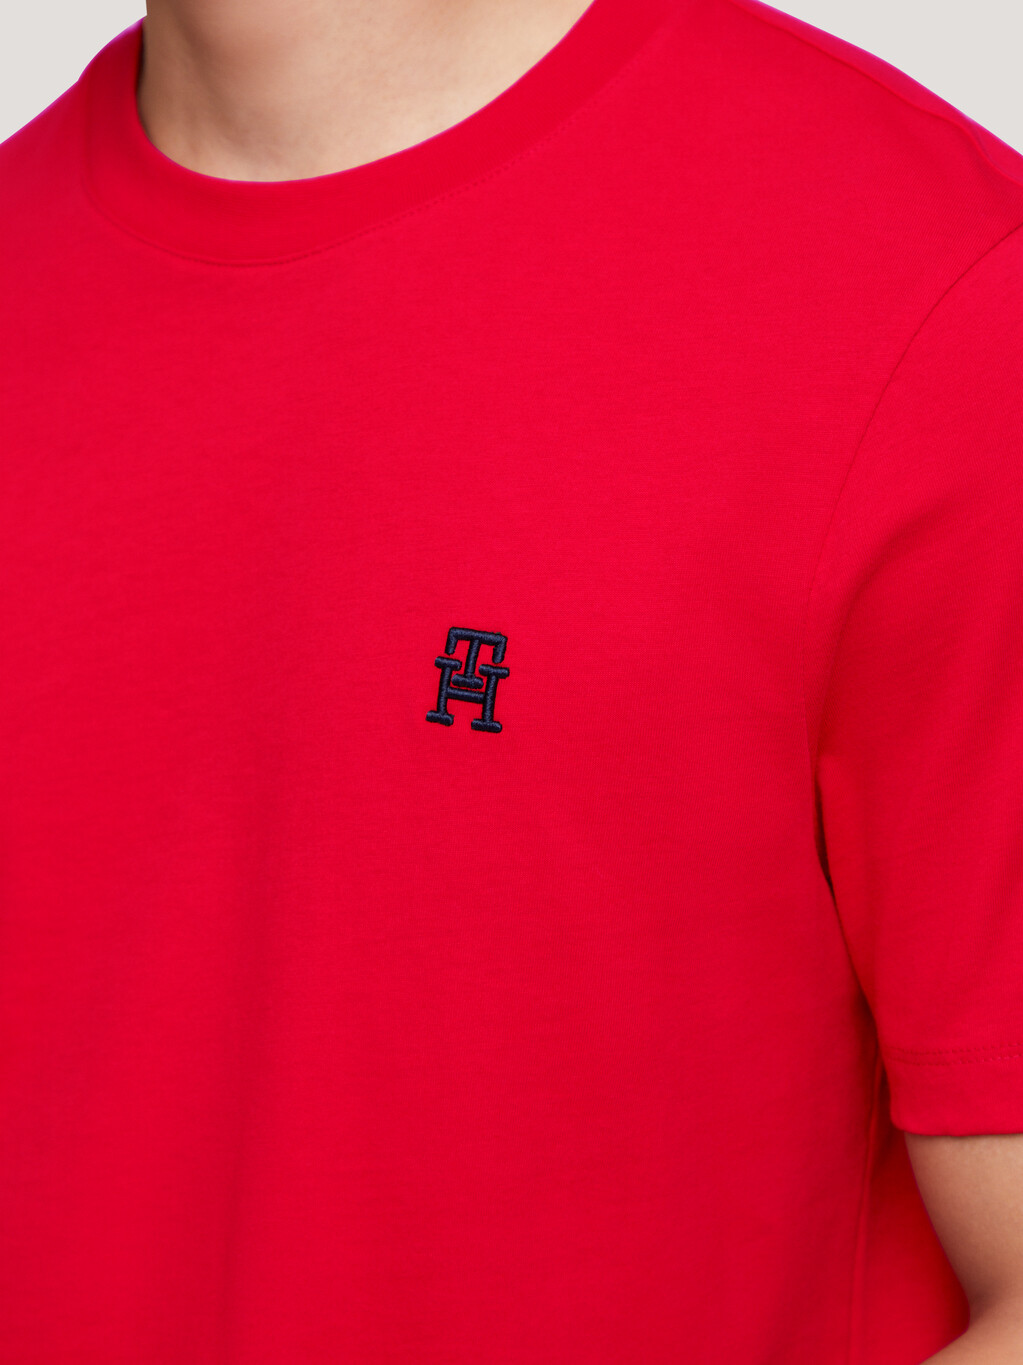 TH Monogram T-Shirt, Fierce Red, hi-res